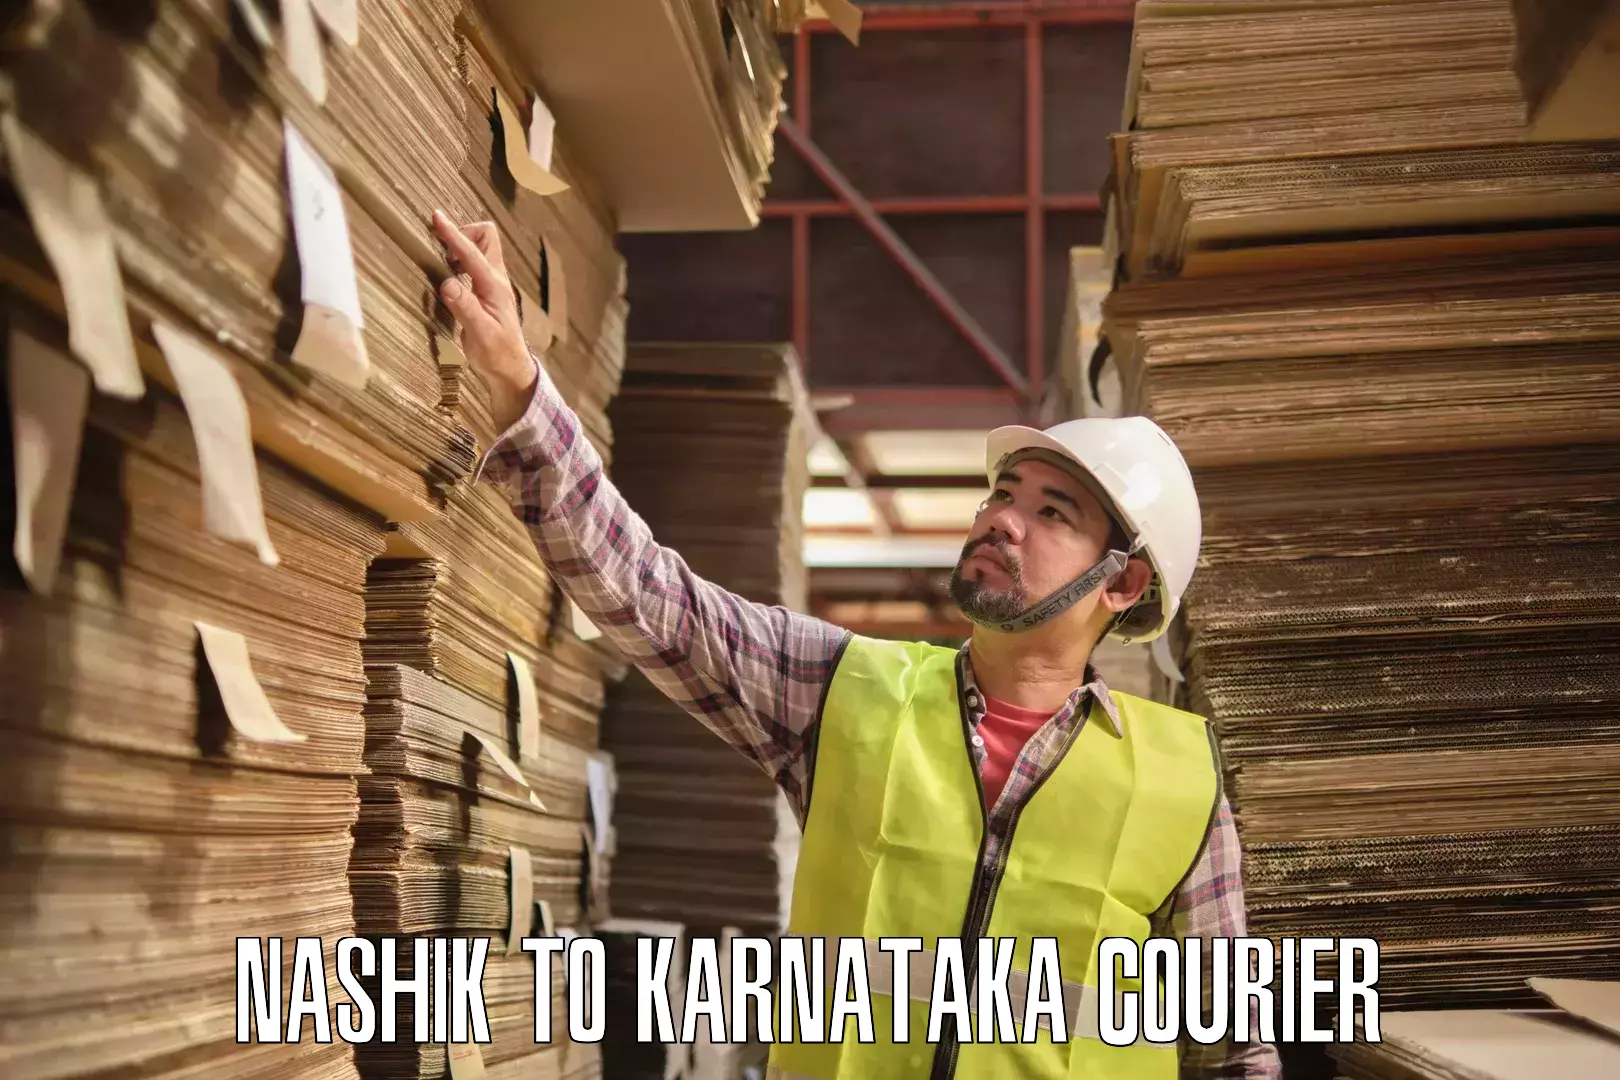 Reliable courier service Nashik to Karnataka